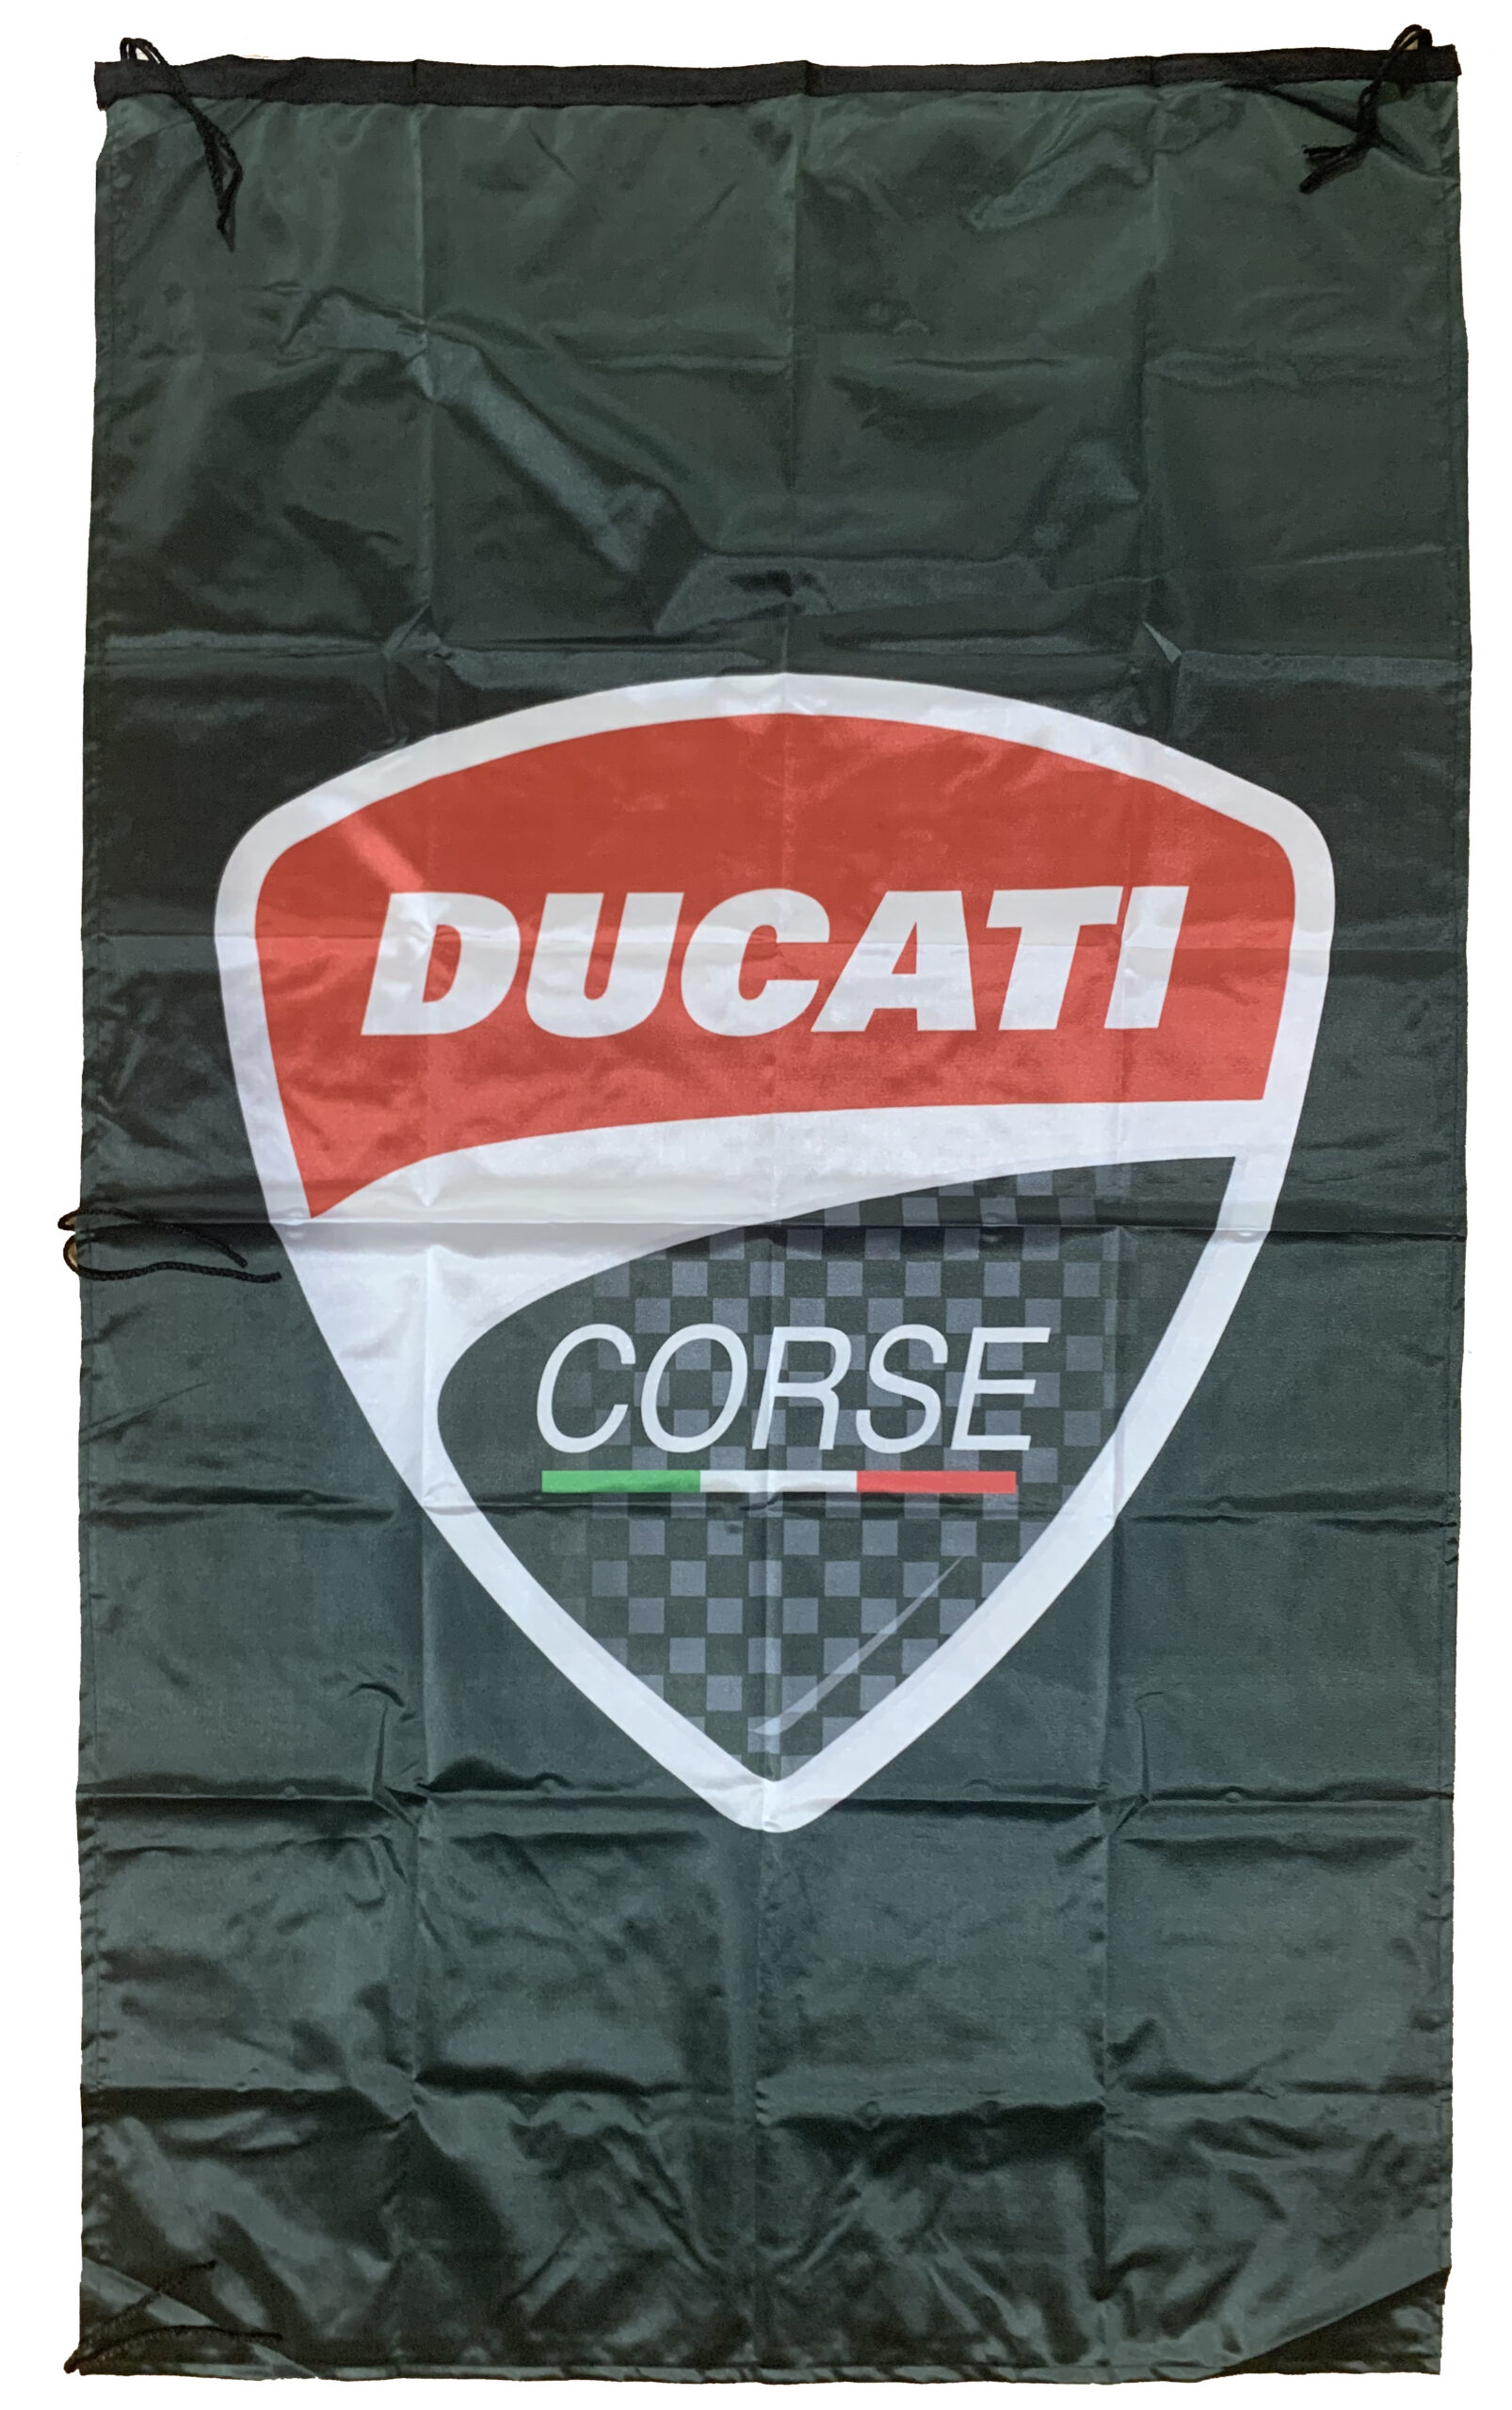 Ducati Corse Power Fahne Banner Fan Flag Bandiera Flagge weiß rot schwarz 2019 